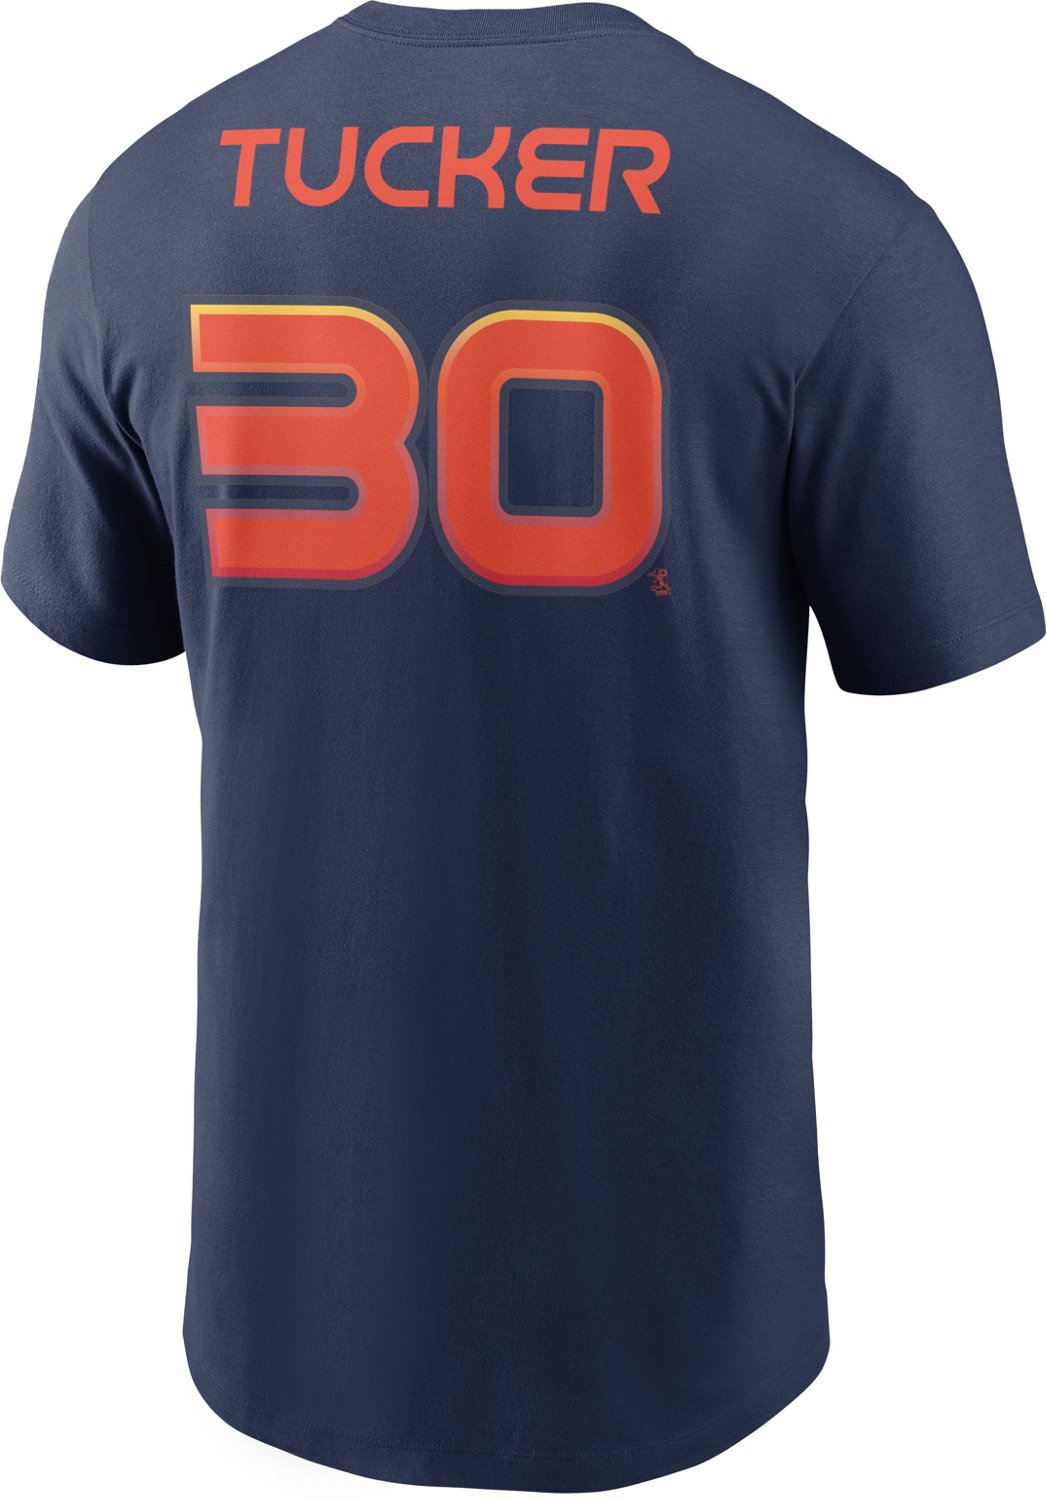 Nike Men's Houston Astros City Connect Tucker N&N T-shirt